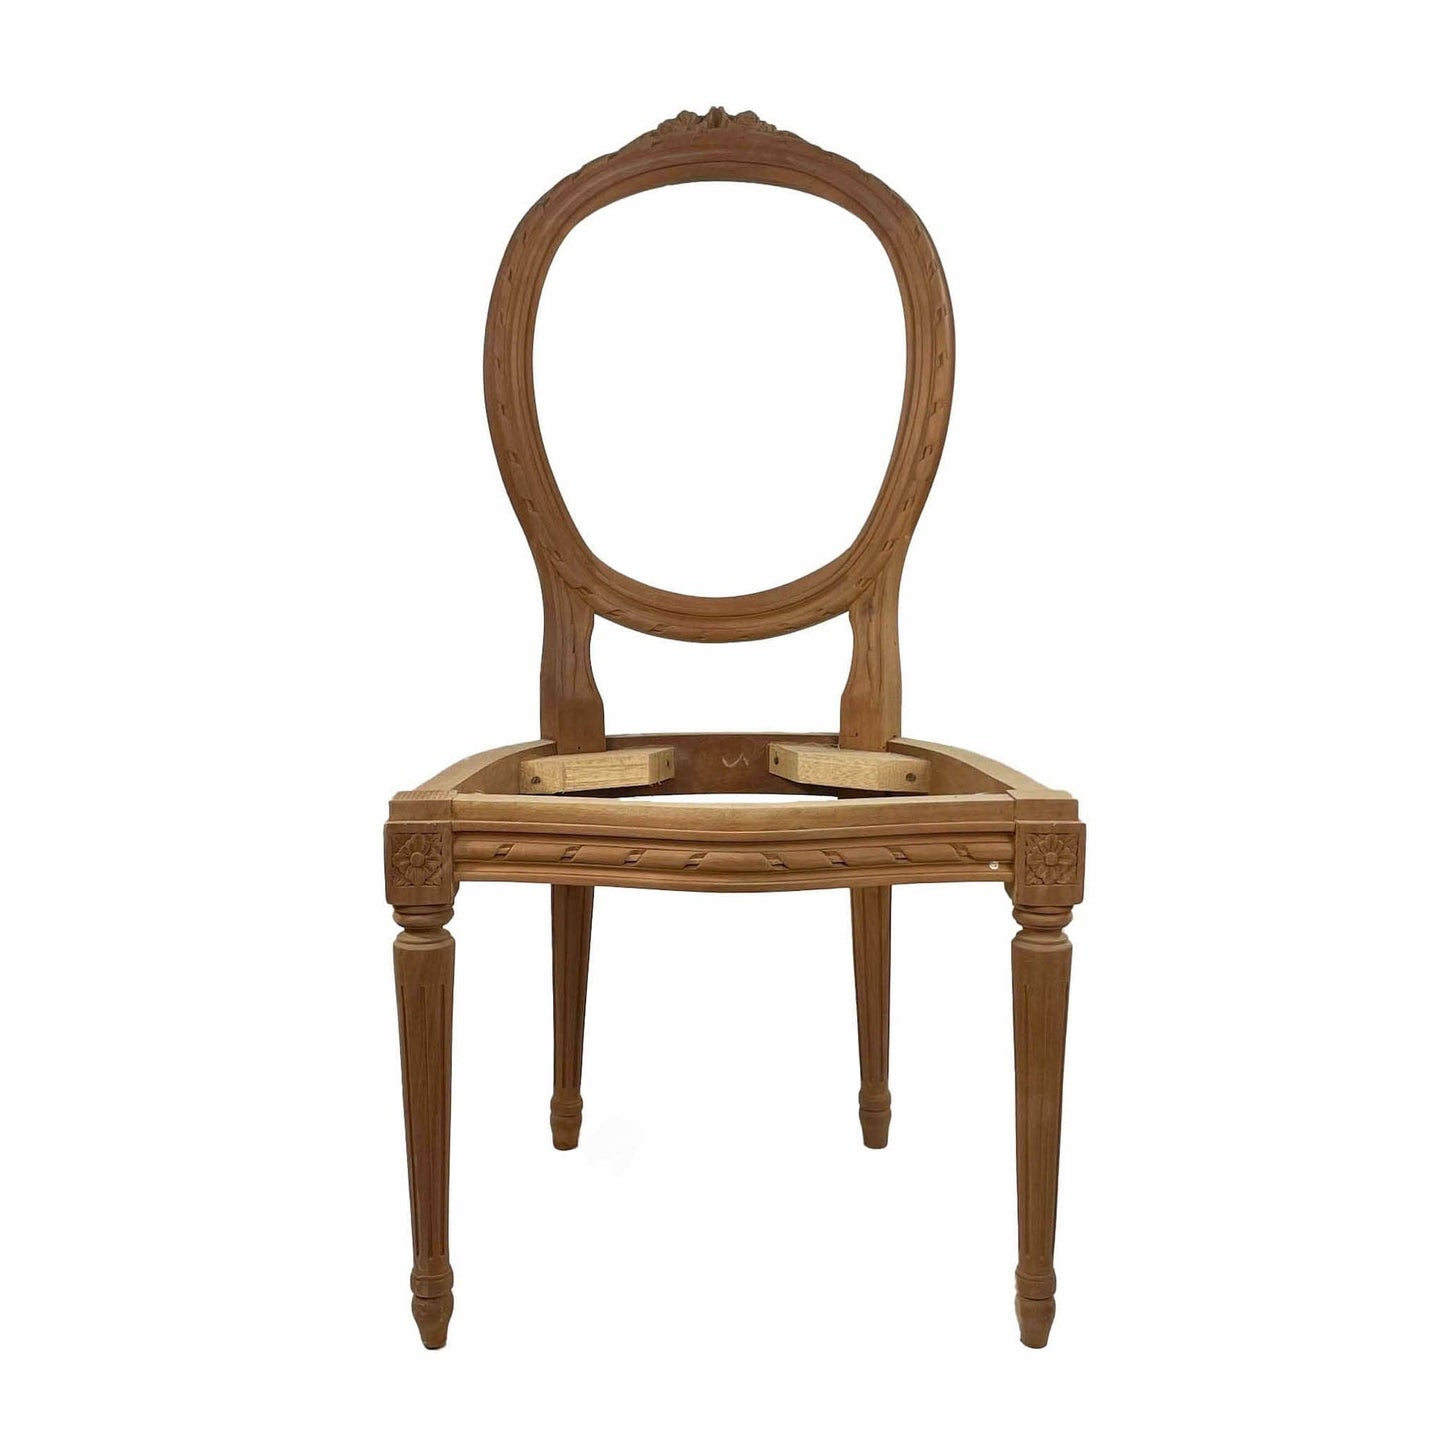 oval back ornate chair frame